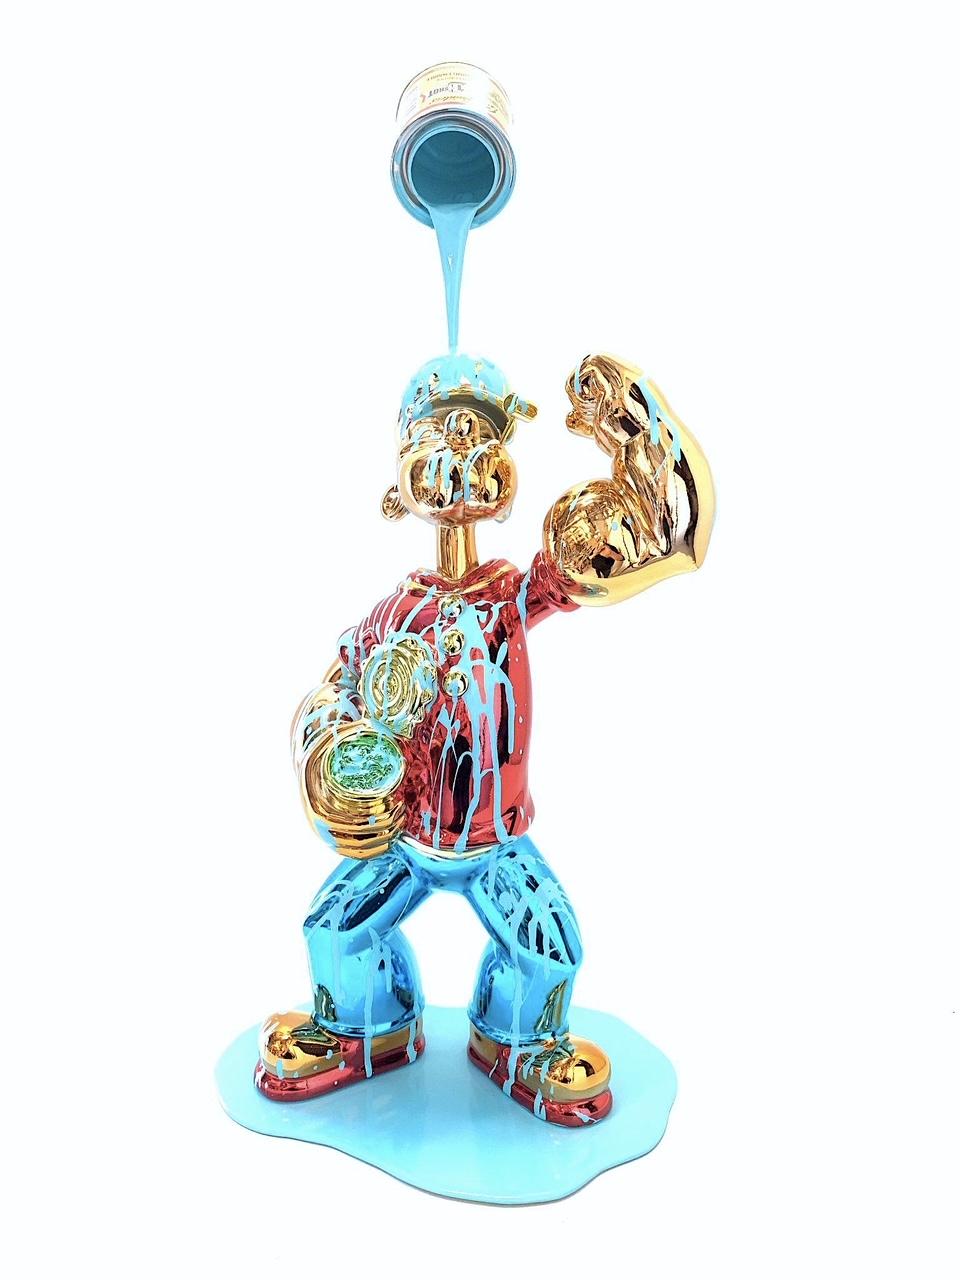 Joe Suzuki Figurative Sculpture - "Happy Accident Koons Popeye" red and blue resin enamel metal pop art sculpture 